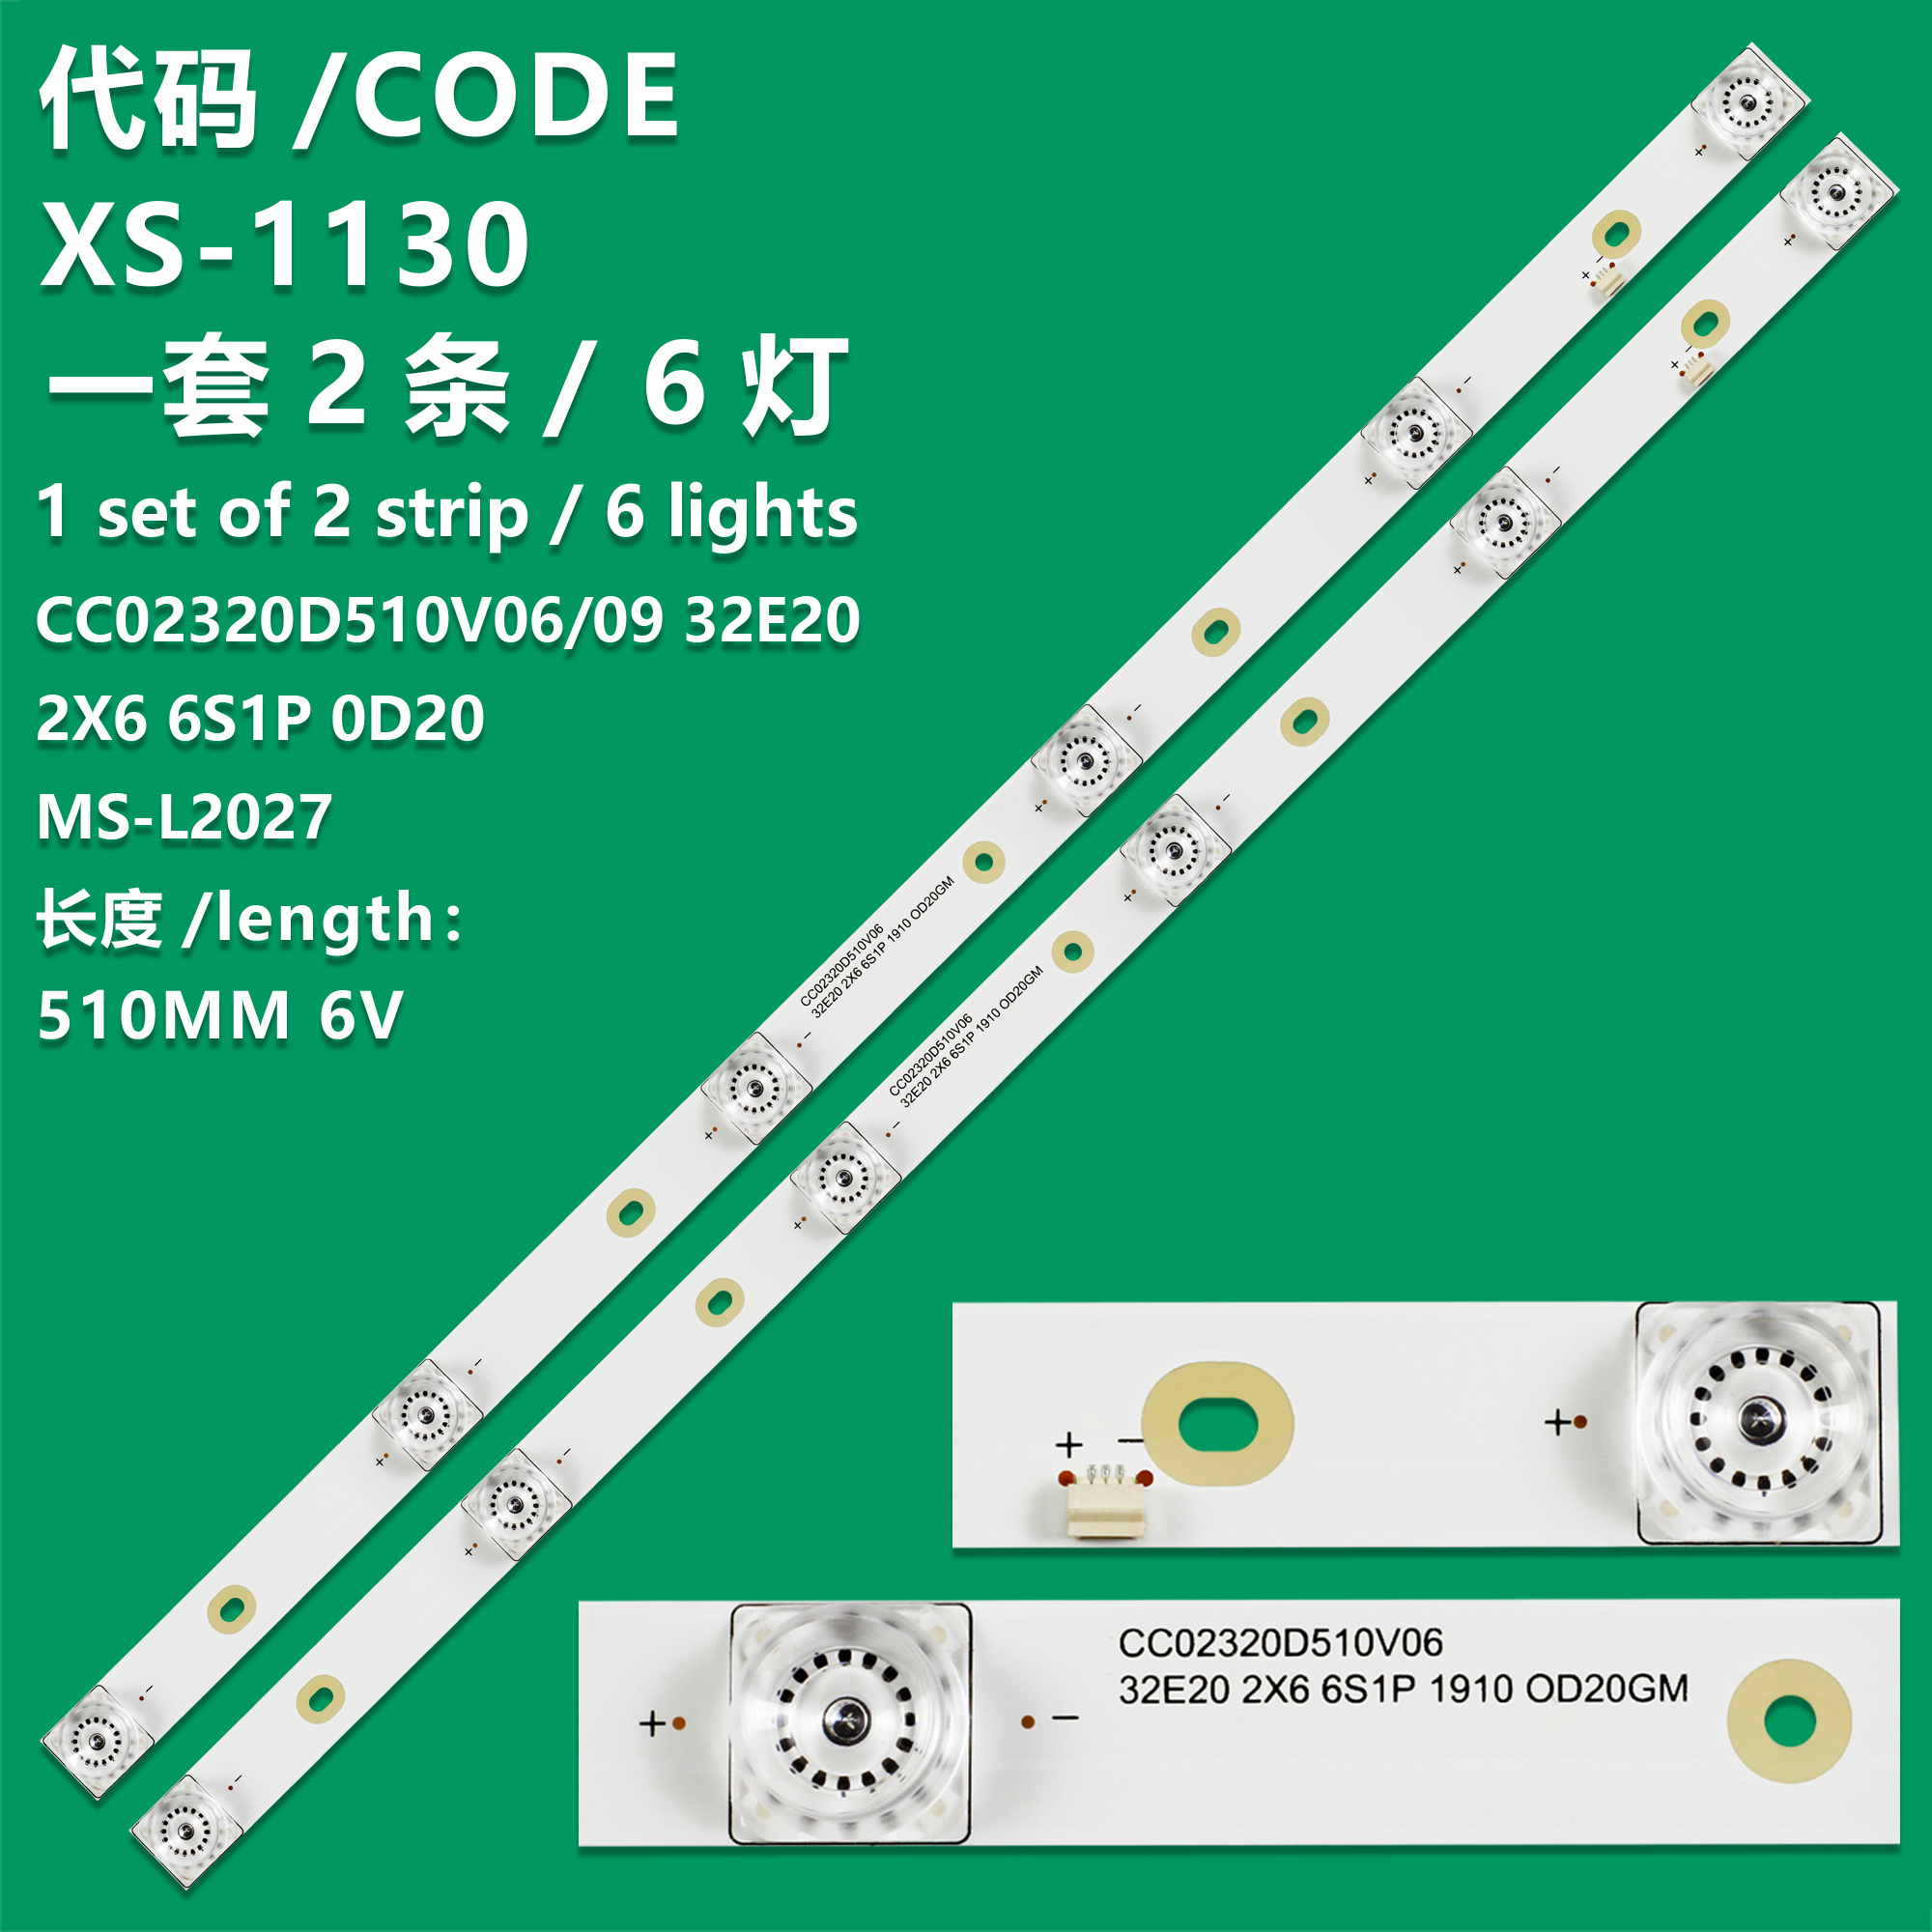 XS-1130 New LCD TV Backlight Strip CC02320D510V09 32E20 2X6 6S1P/MS-L2027 For Panda 32D6S